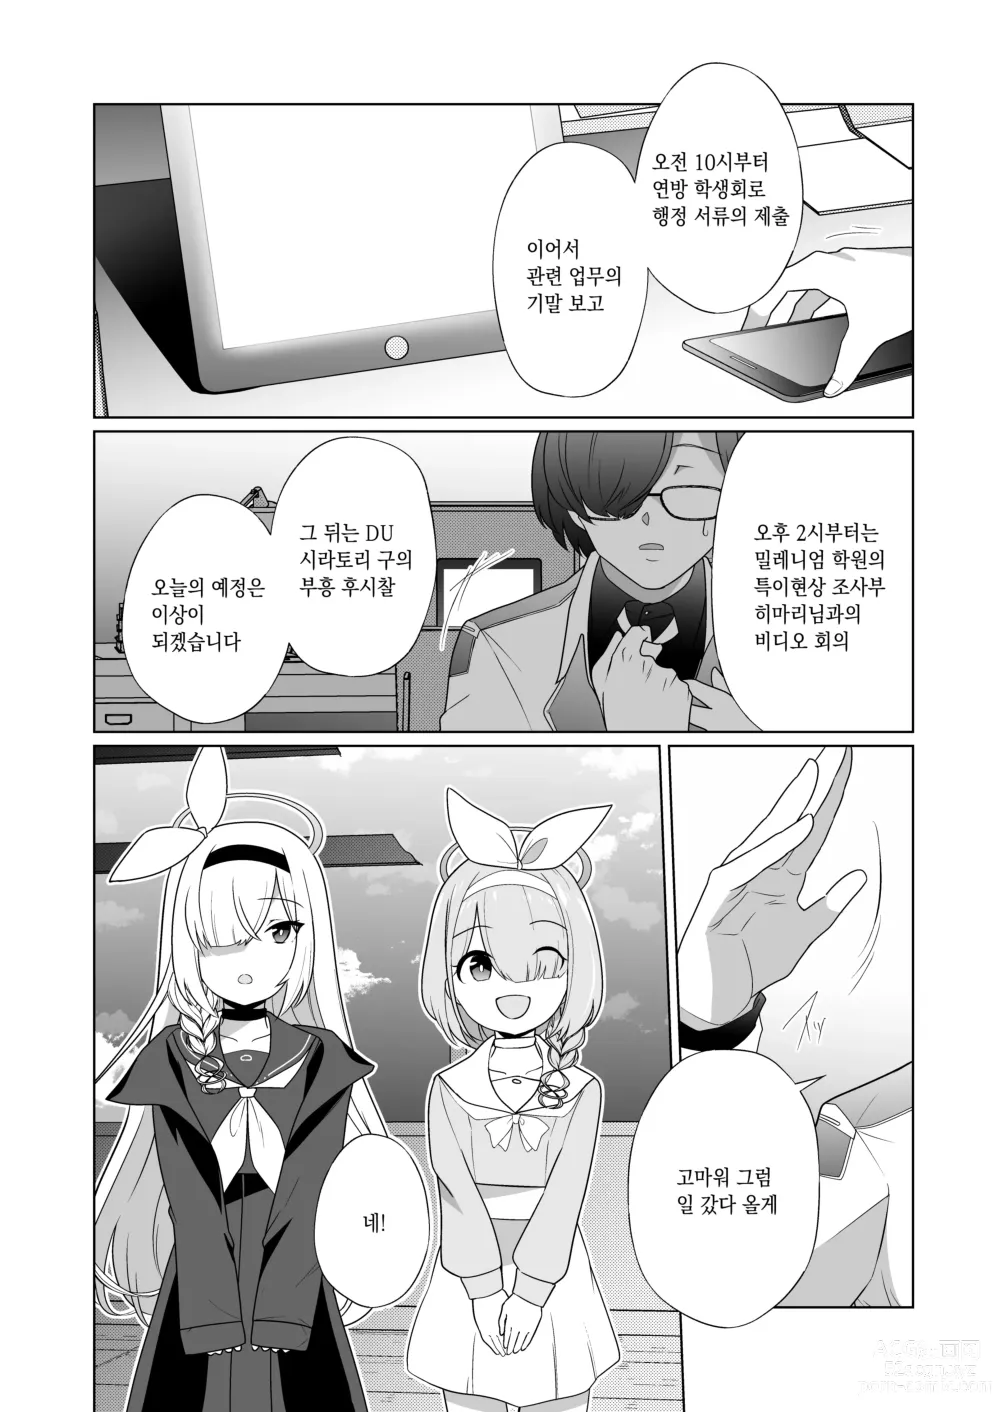 Page 2 of doujinshi 싫어하는 프라나가 기꺼이 봉사하는 이야기